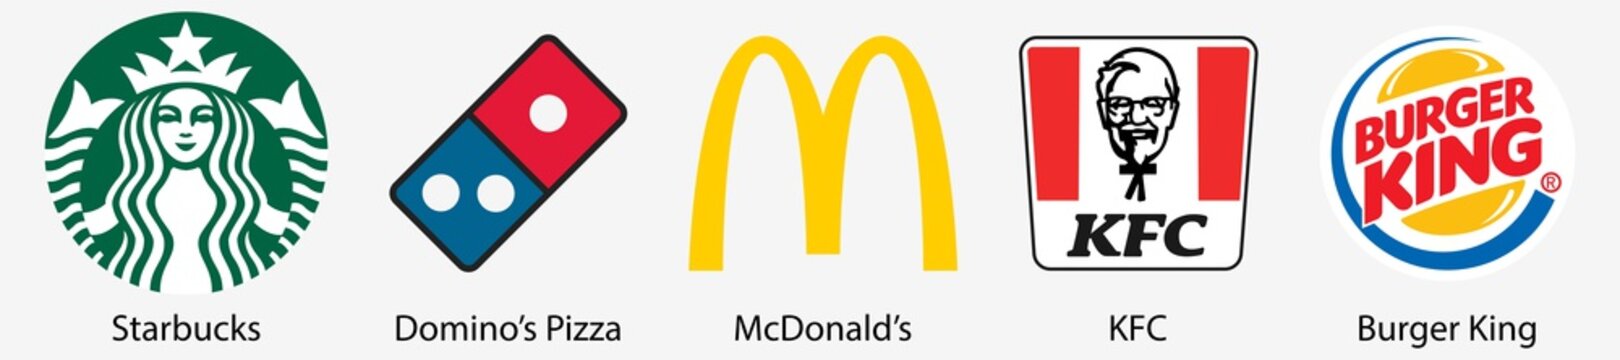 Starbucks, Domino's Pizza, McDonald's, KFC, Burger King. Fast food icon. Restaurant logo. Popular cafe logo. Editorial vector. Rivne, Ukraine - December 23, 2020.